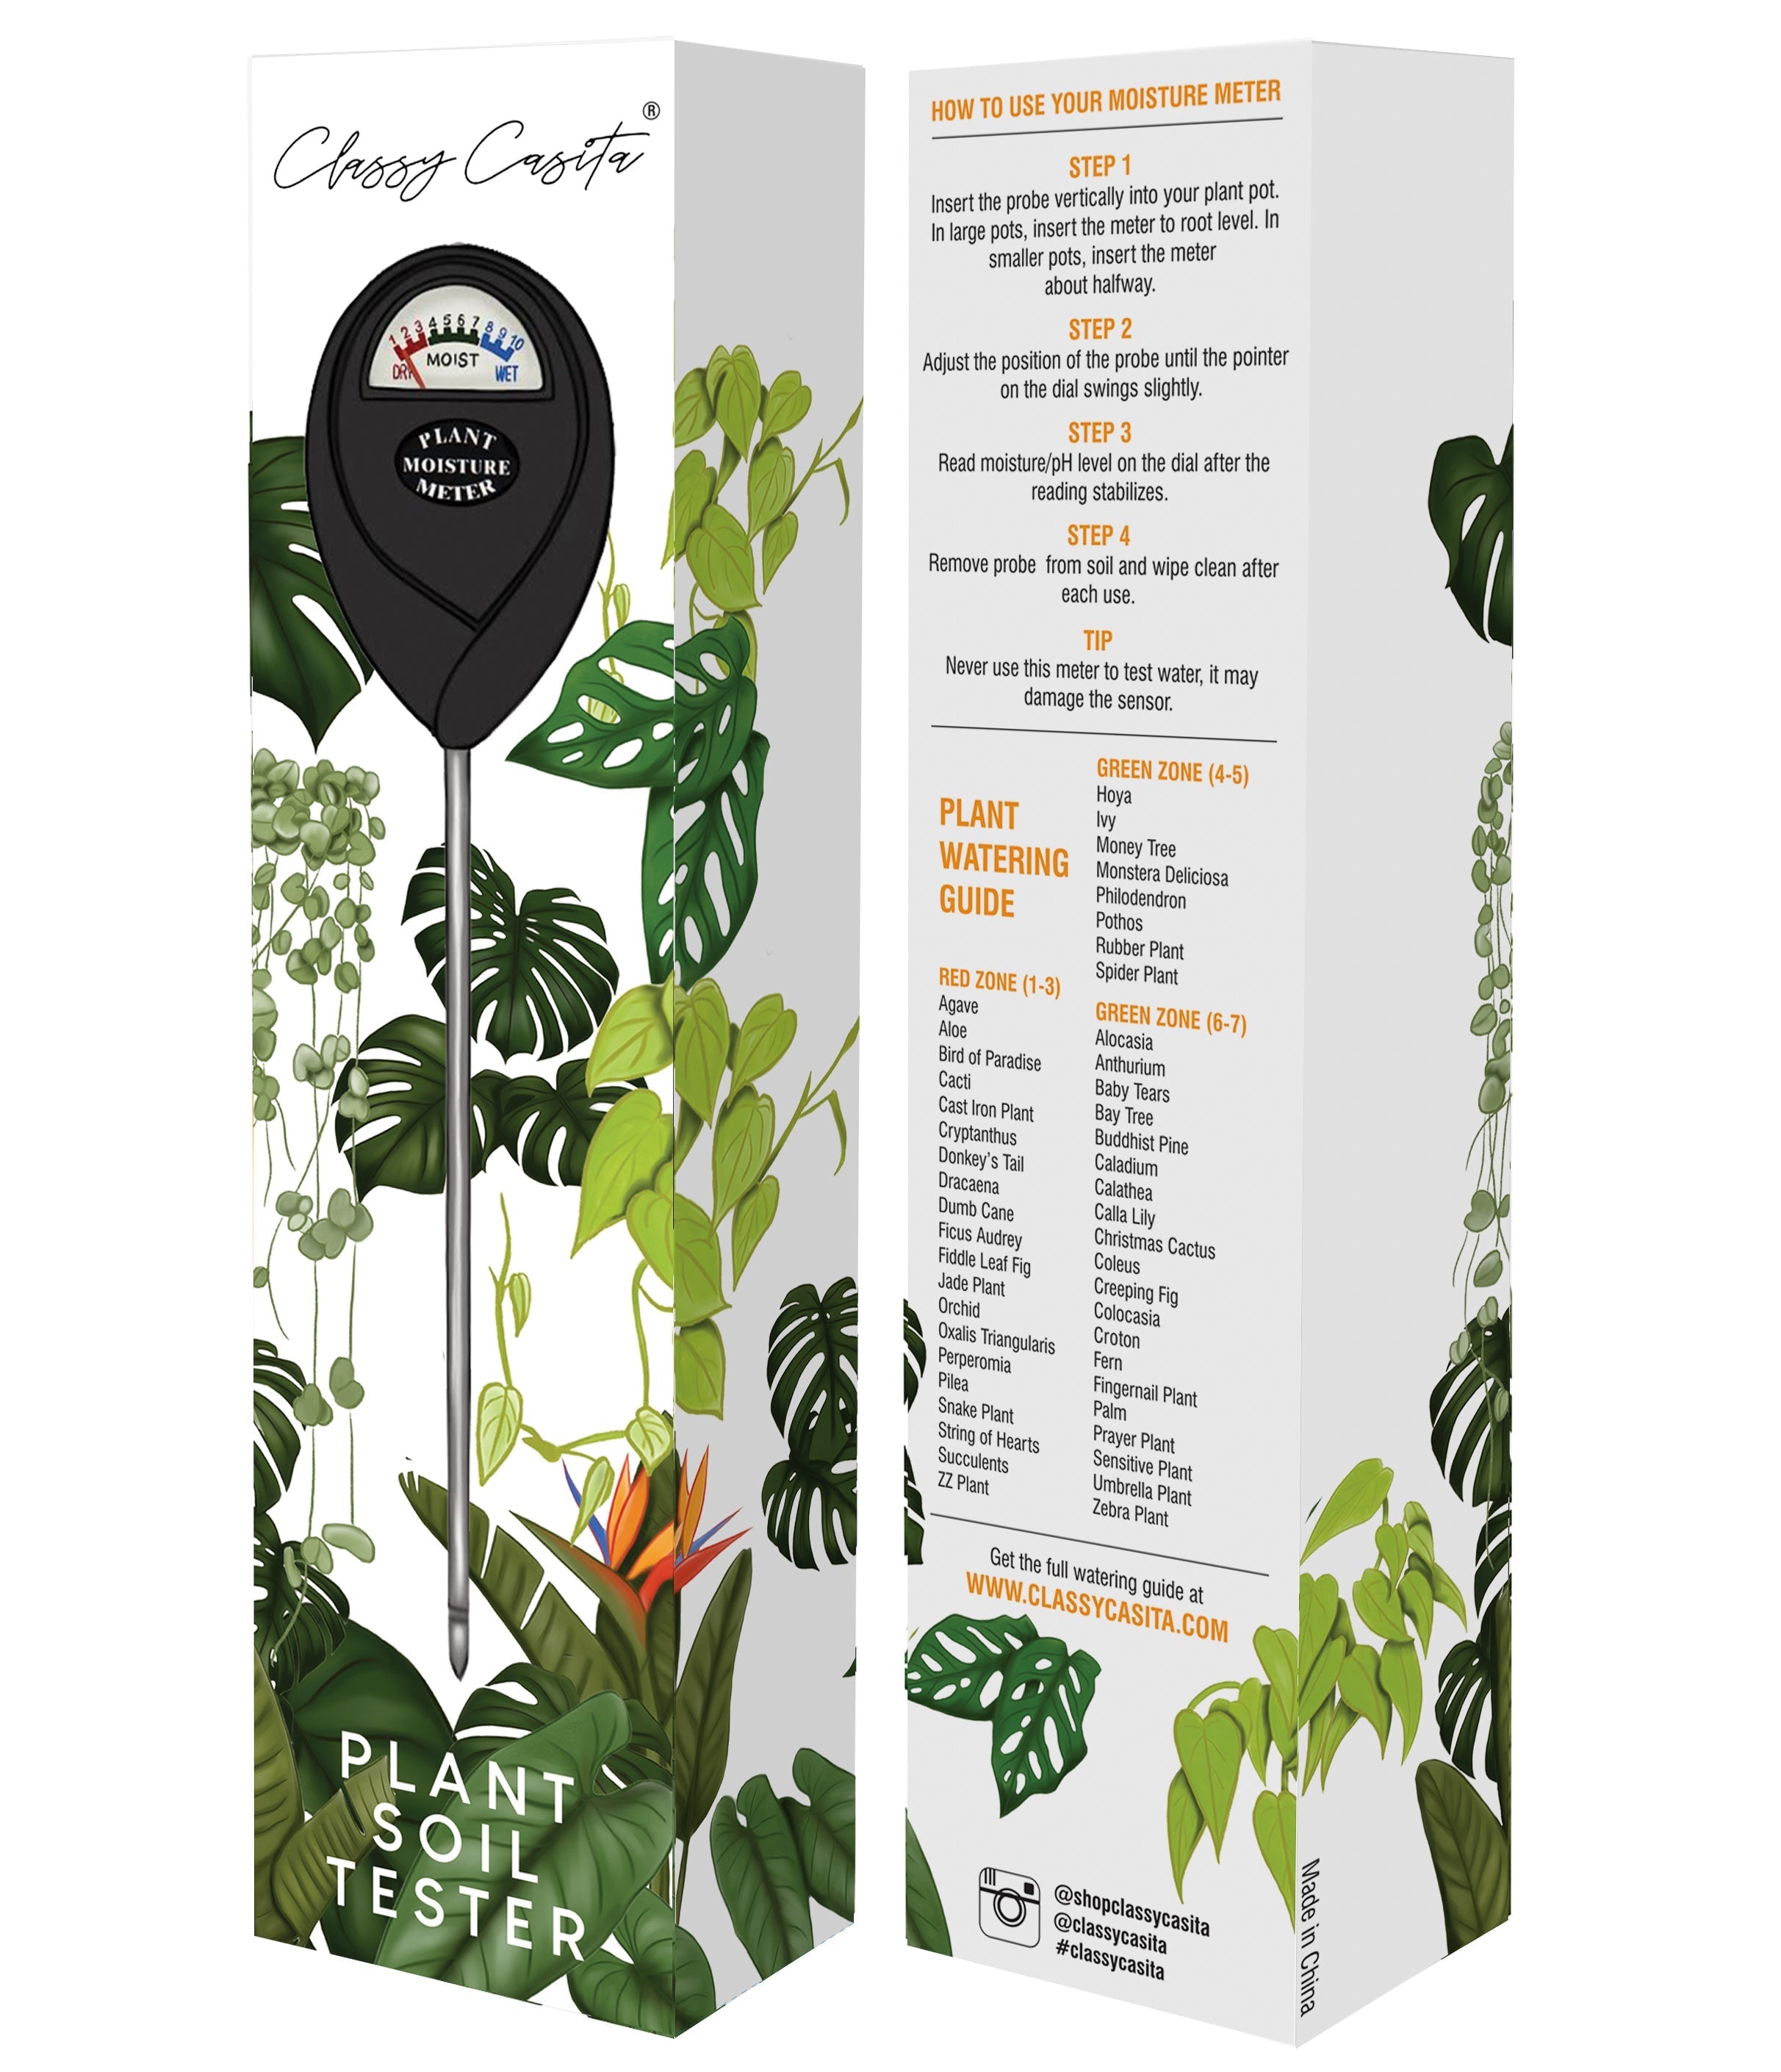 Classy Casita Soil Moisture Meter: Houseplant Care with eBook - Hydrometer Sensor for Plants - Essential Moisture Meter for Indoor & Outdoor Plants